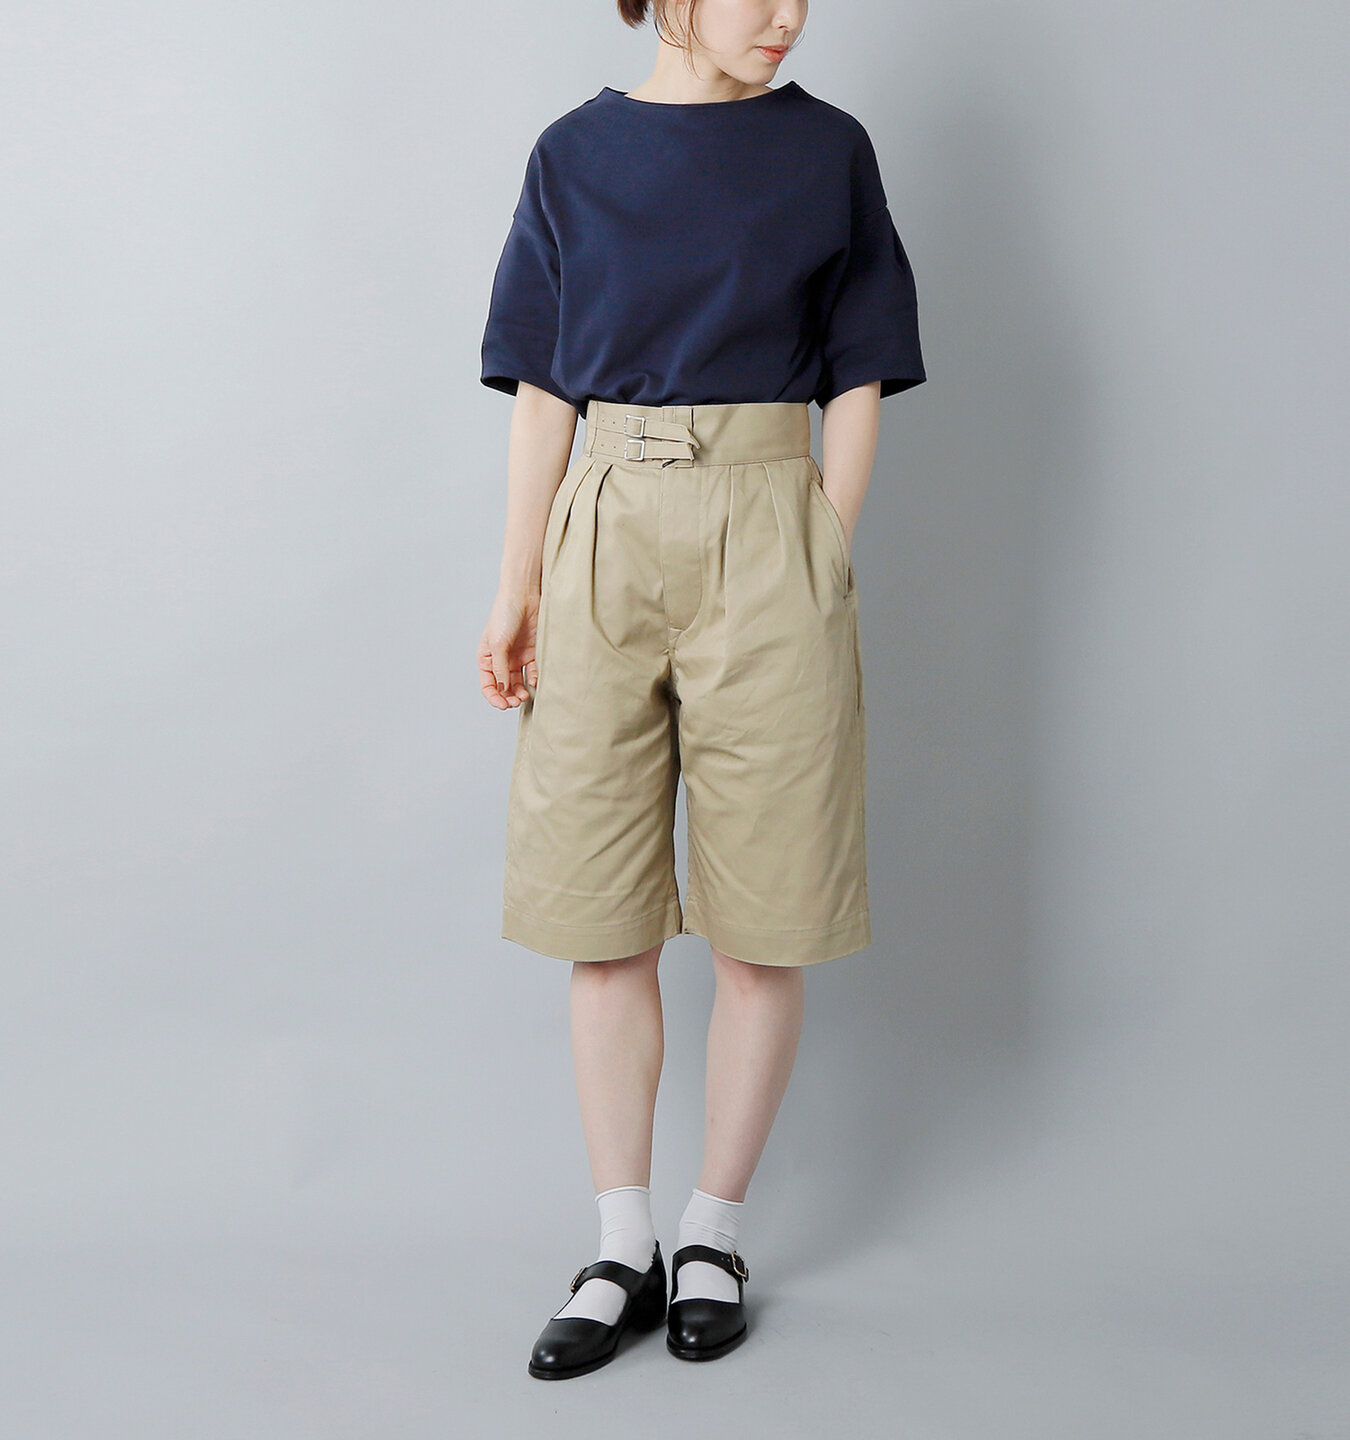 LENO｜グルカショートトラウザーズ”Gurkha Short Trousers” leno-pt002 